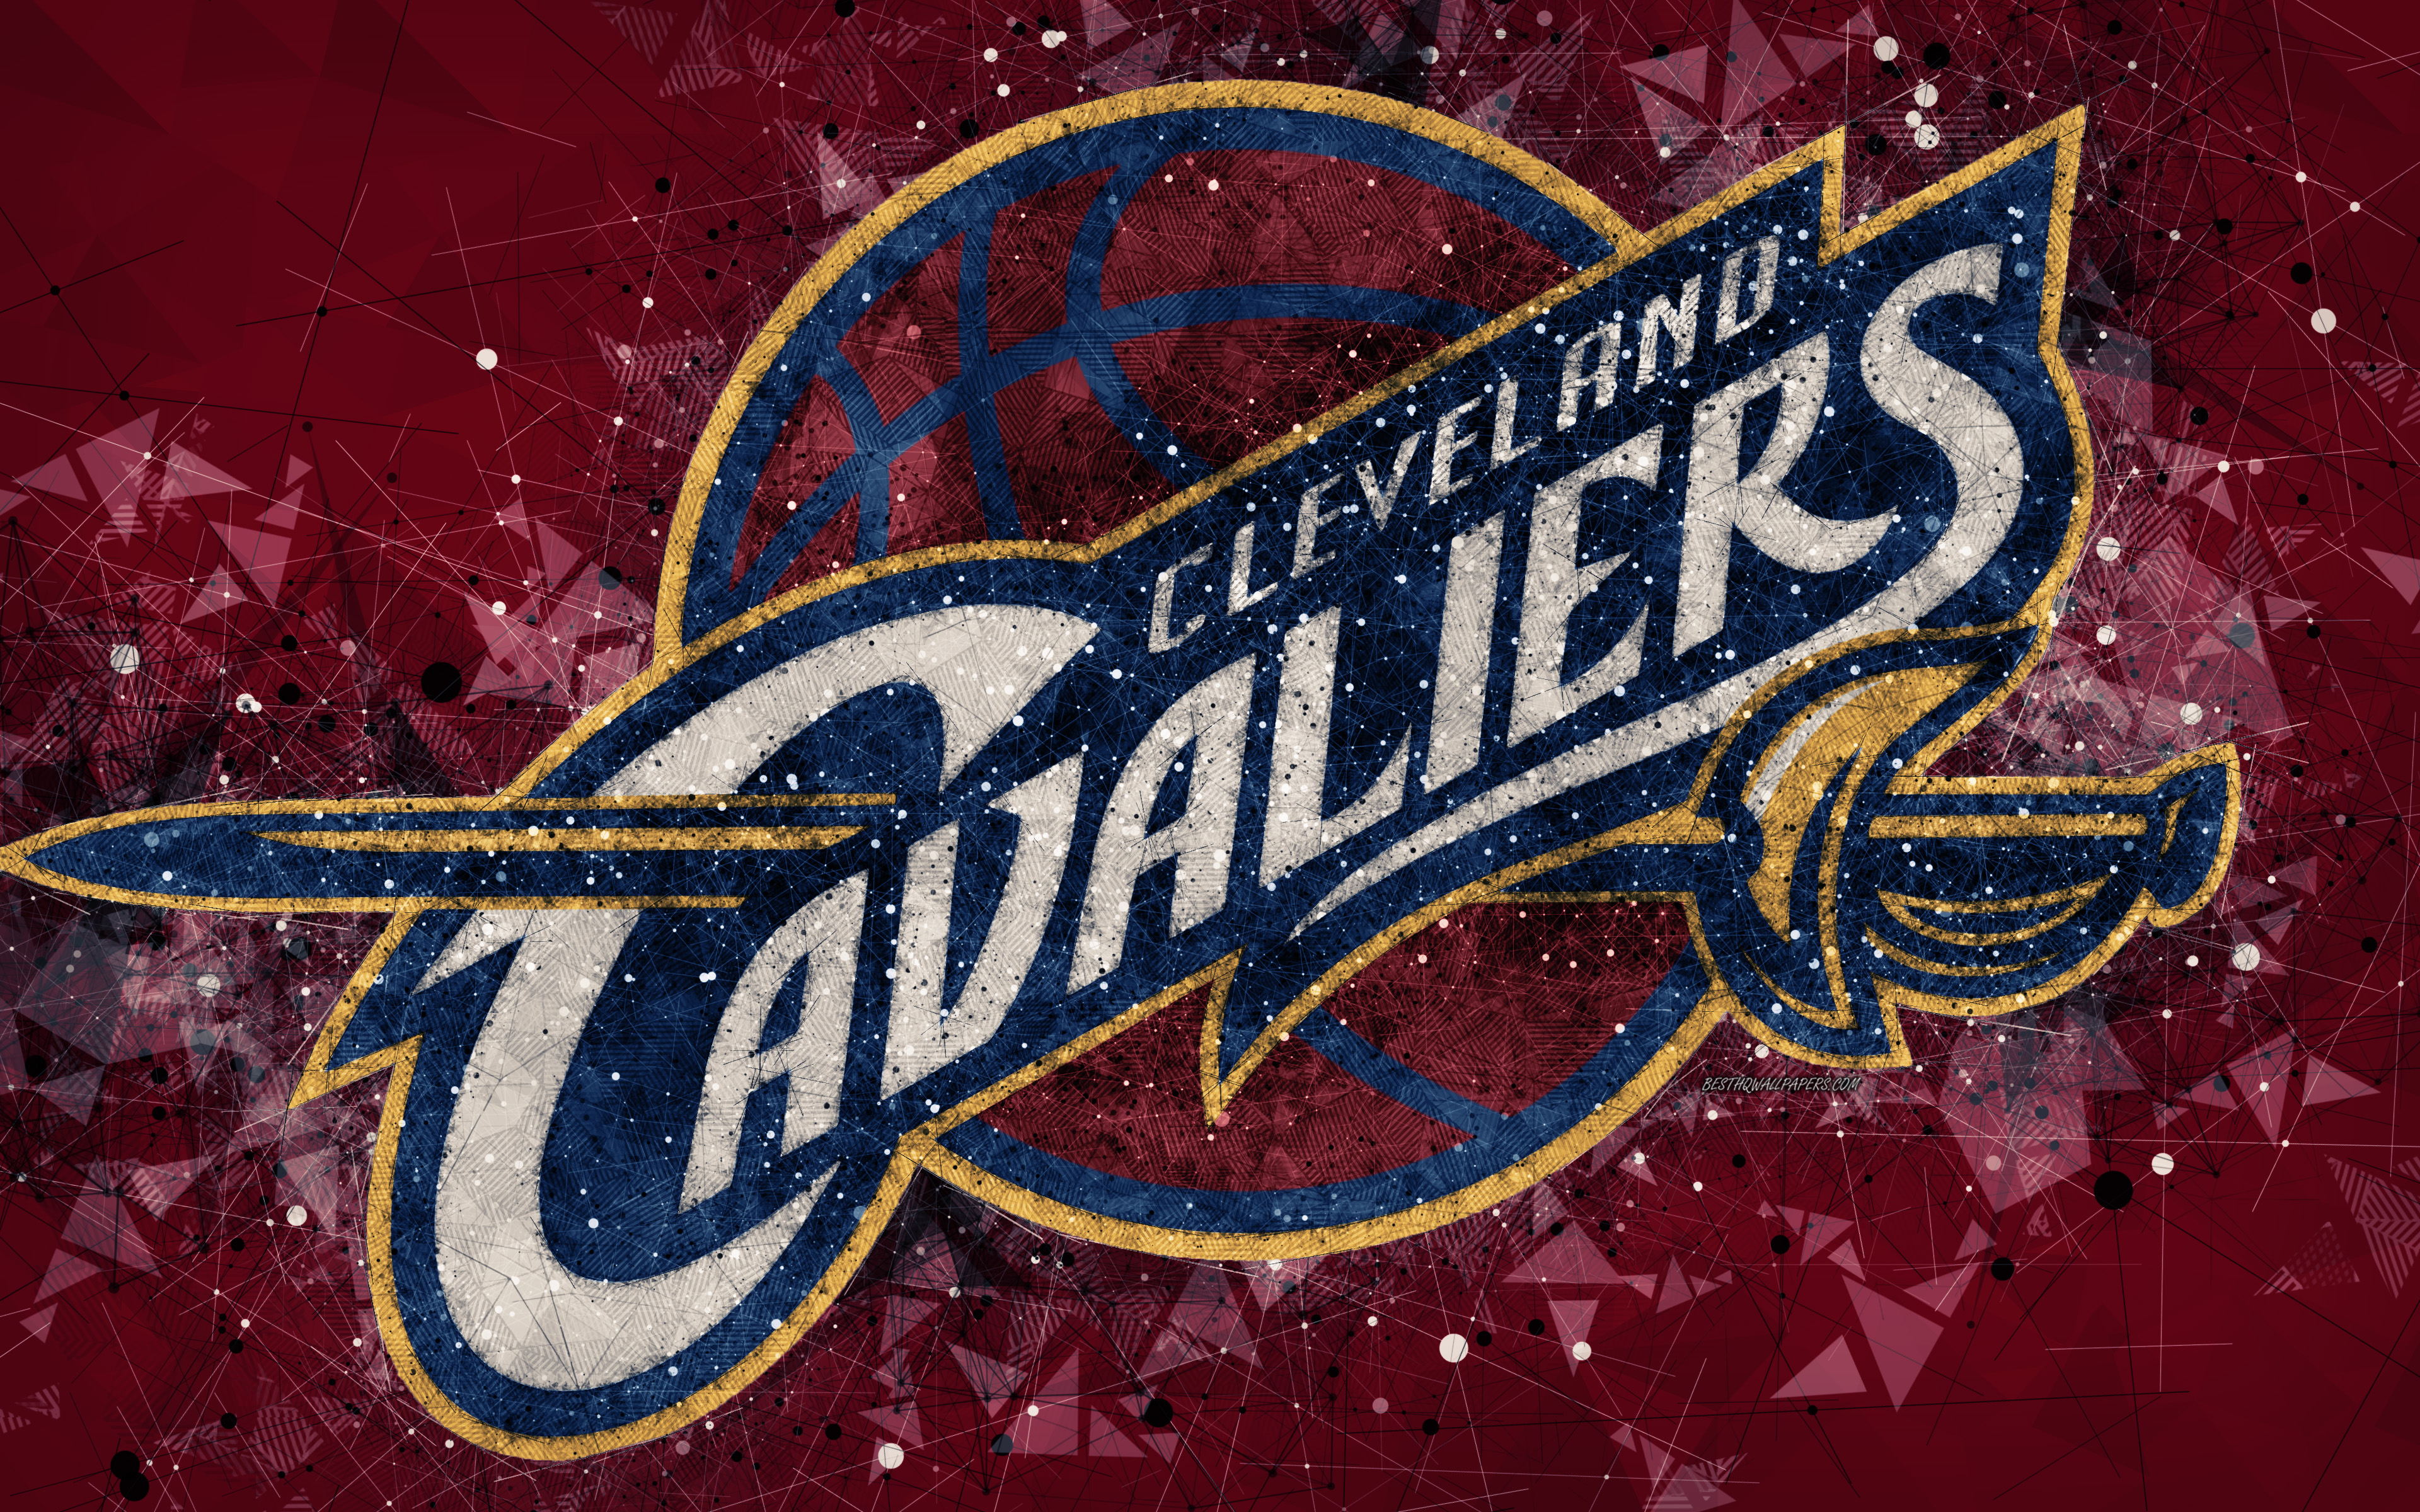 Basketball Cleveland Cavaliers Logo Nba 3840x2400